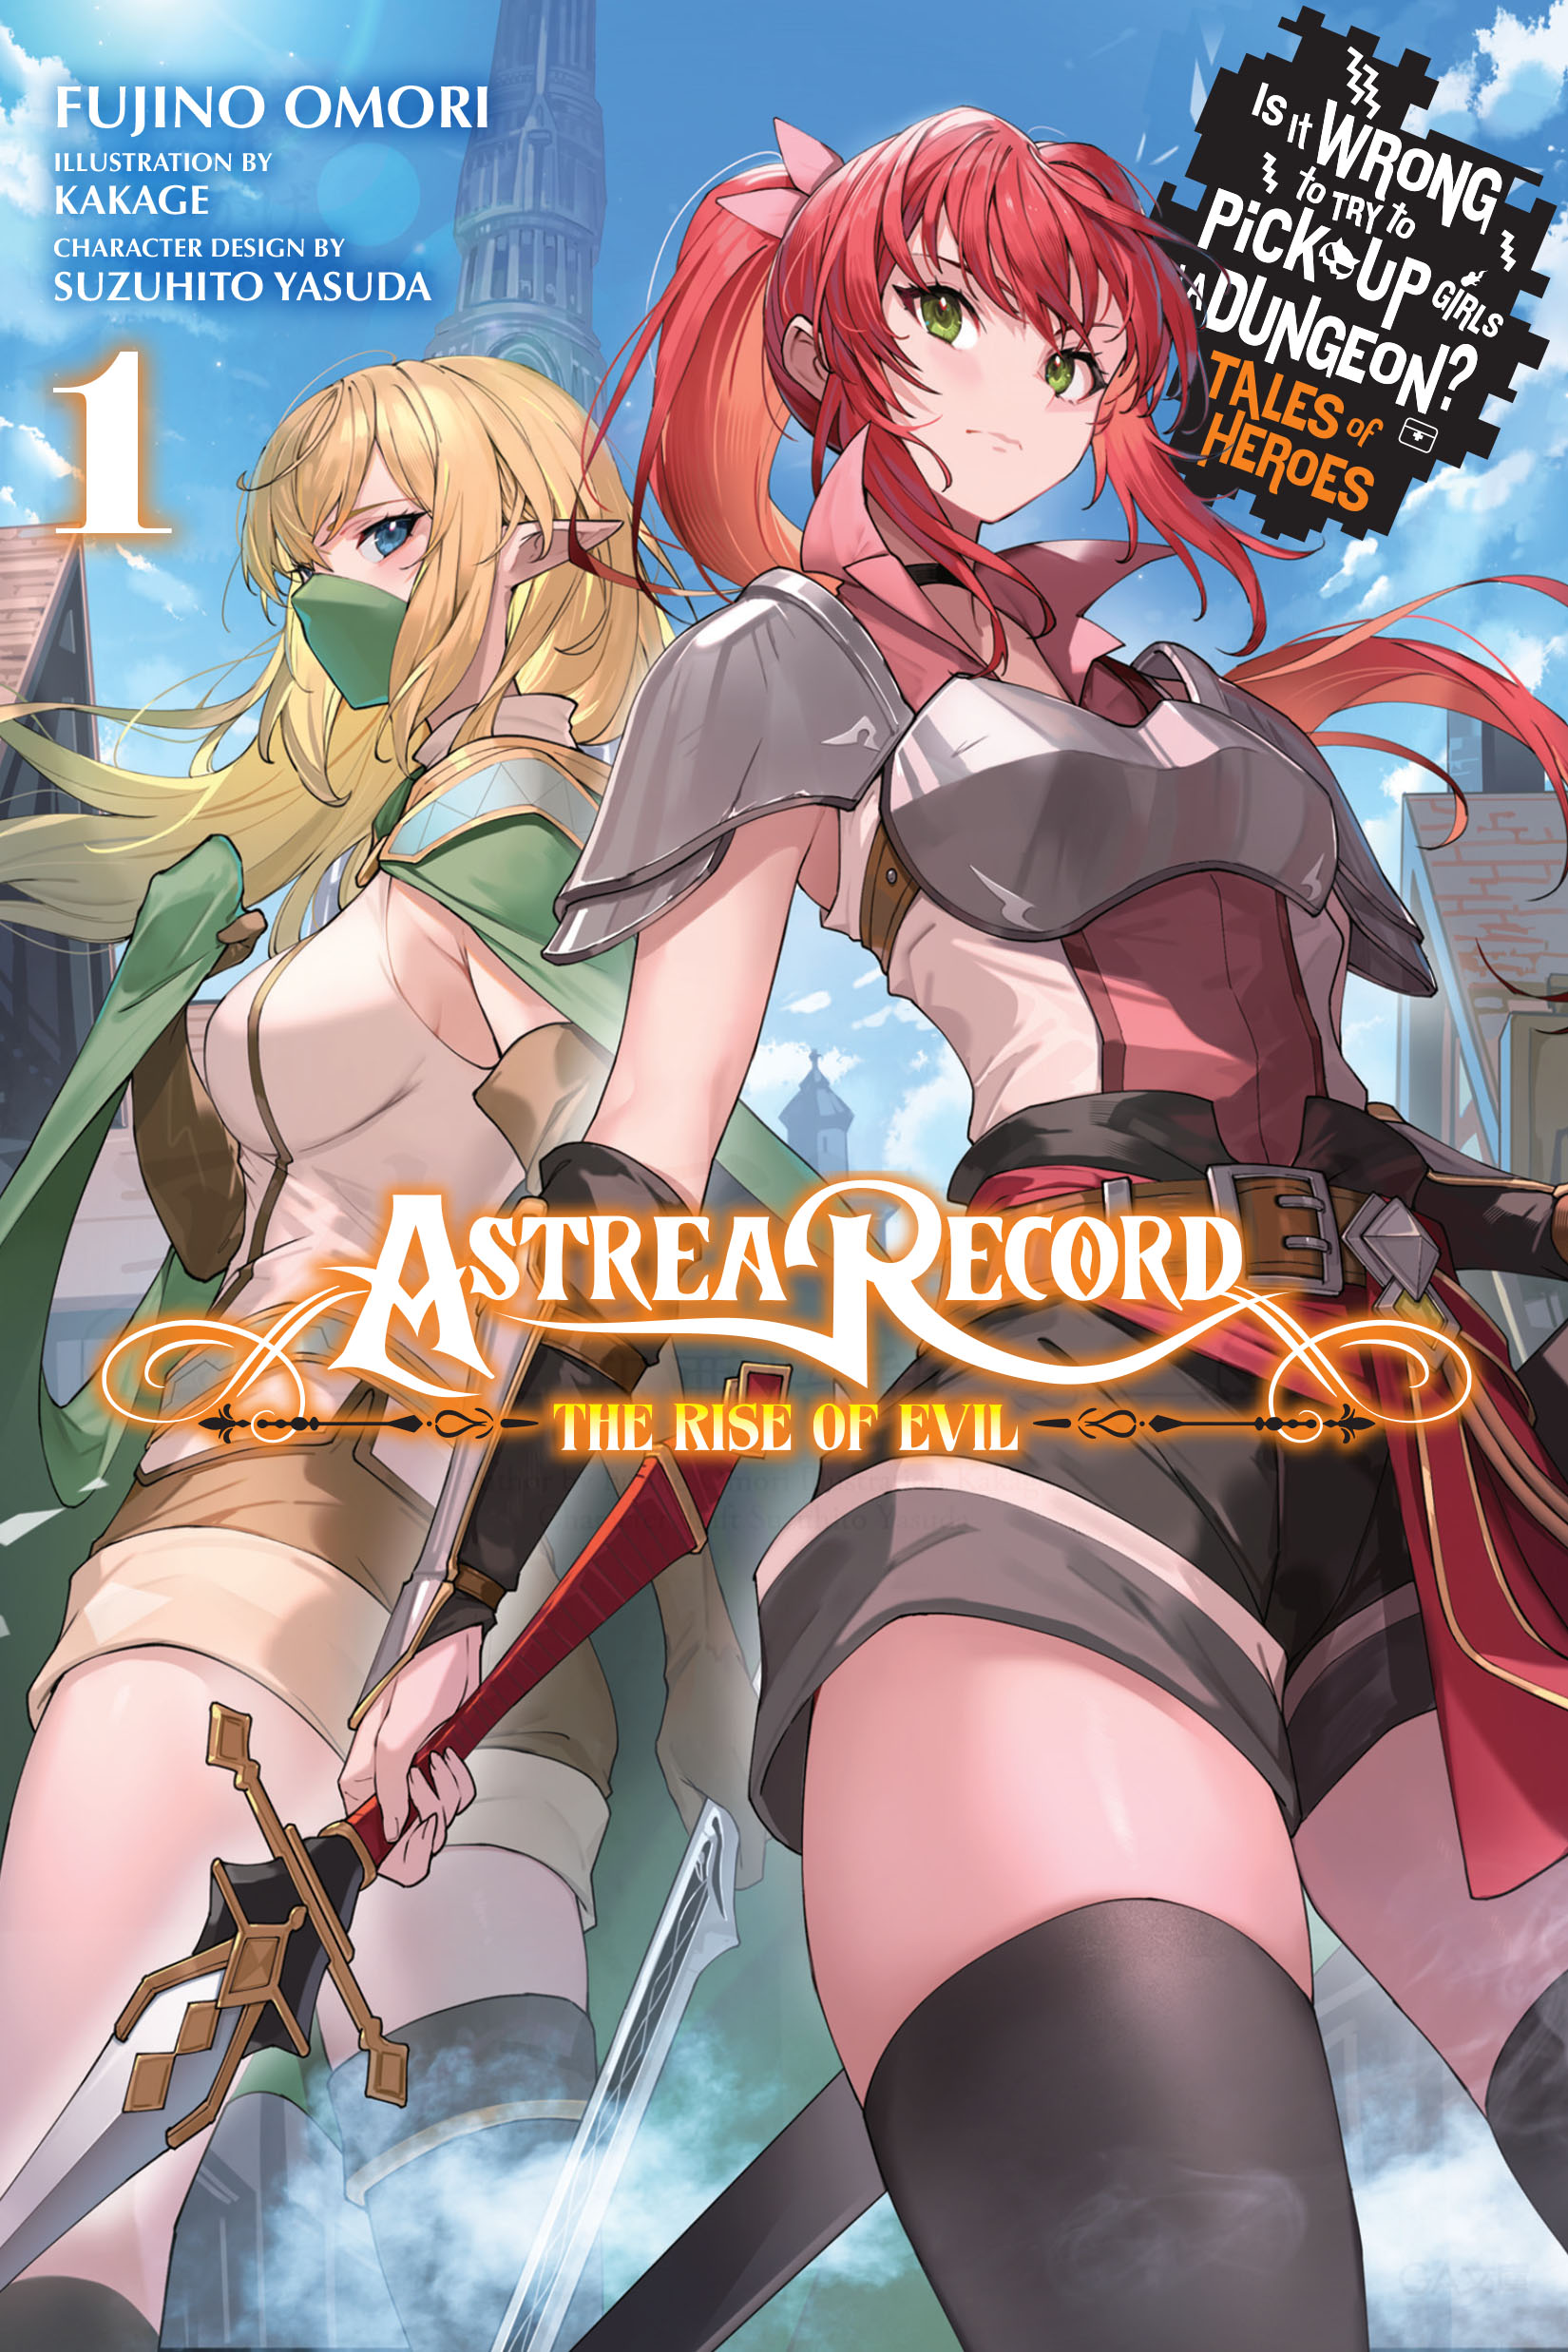 Side Stories from Orario: Astrea Record, Sword Oratoria, and Familia Chronicles!